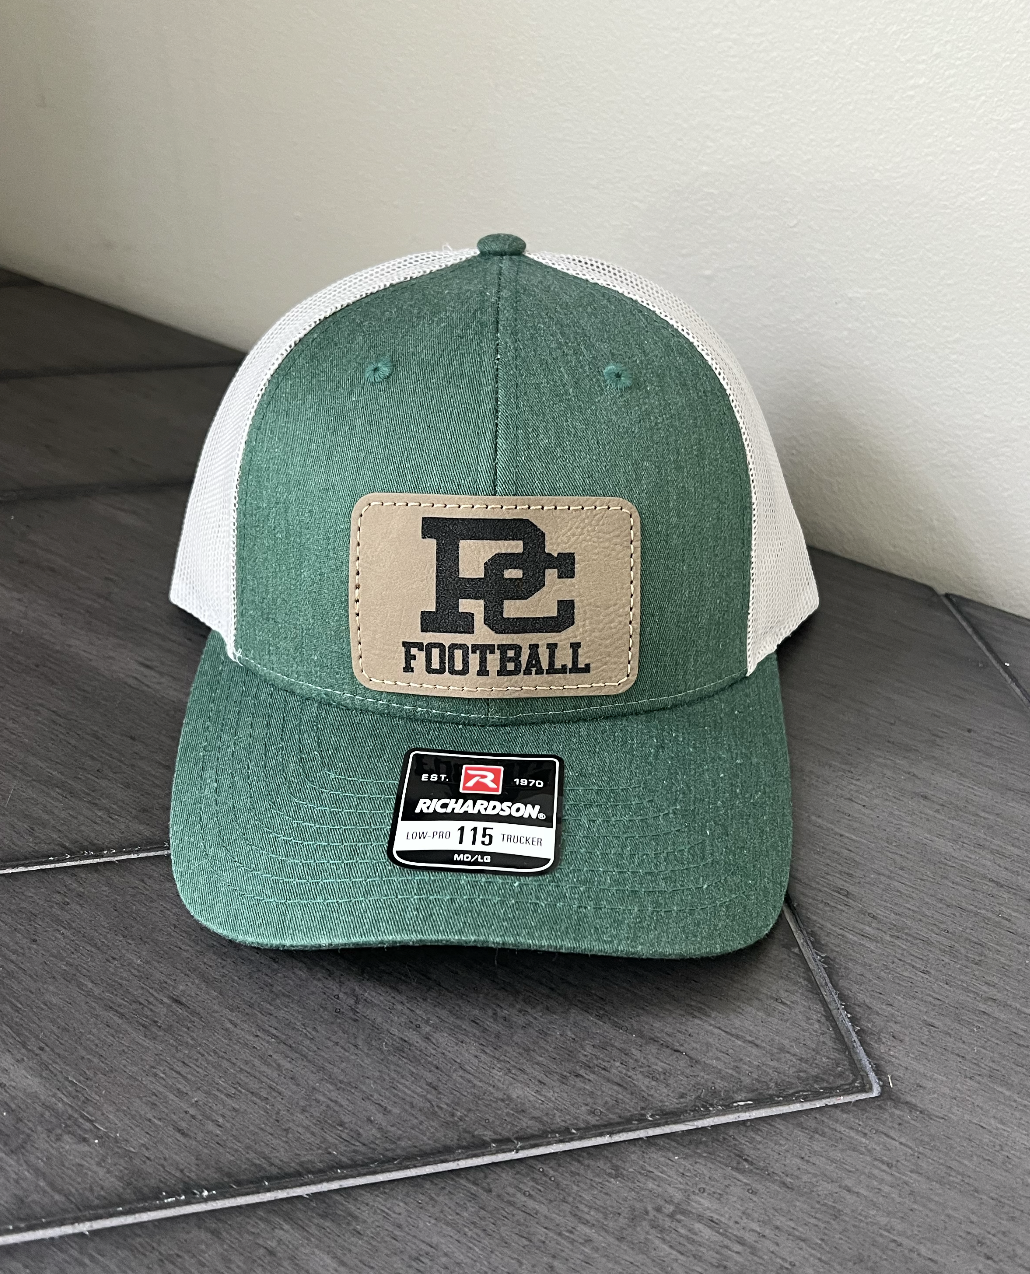 PC Football leather patch baseball hat green/light tan